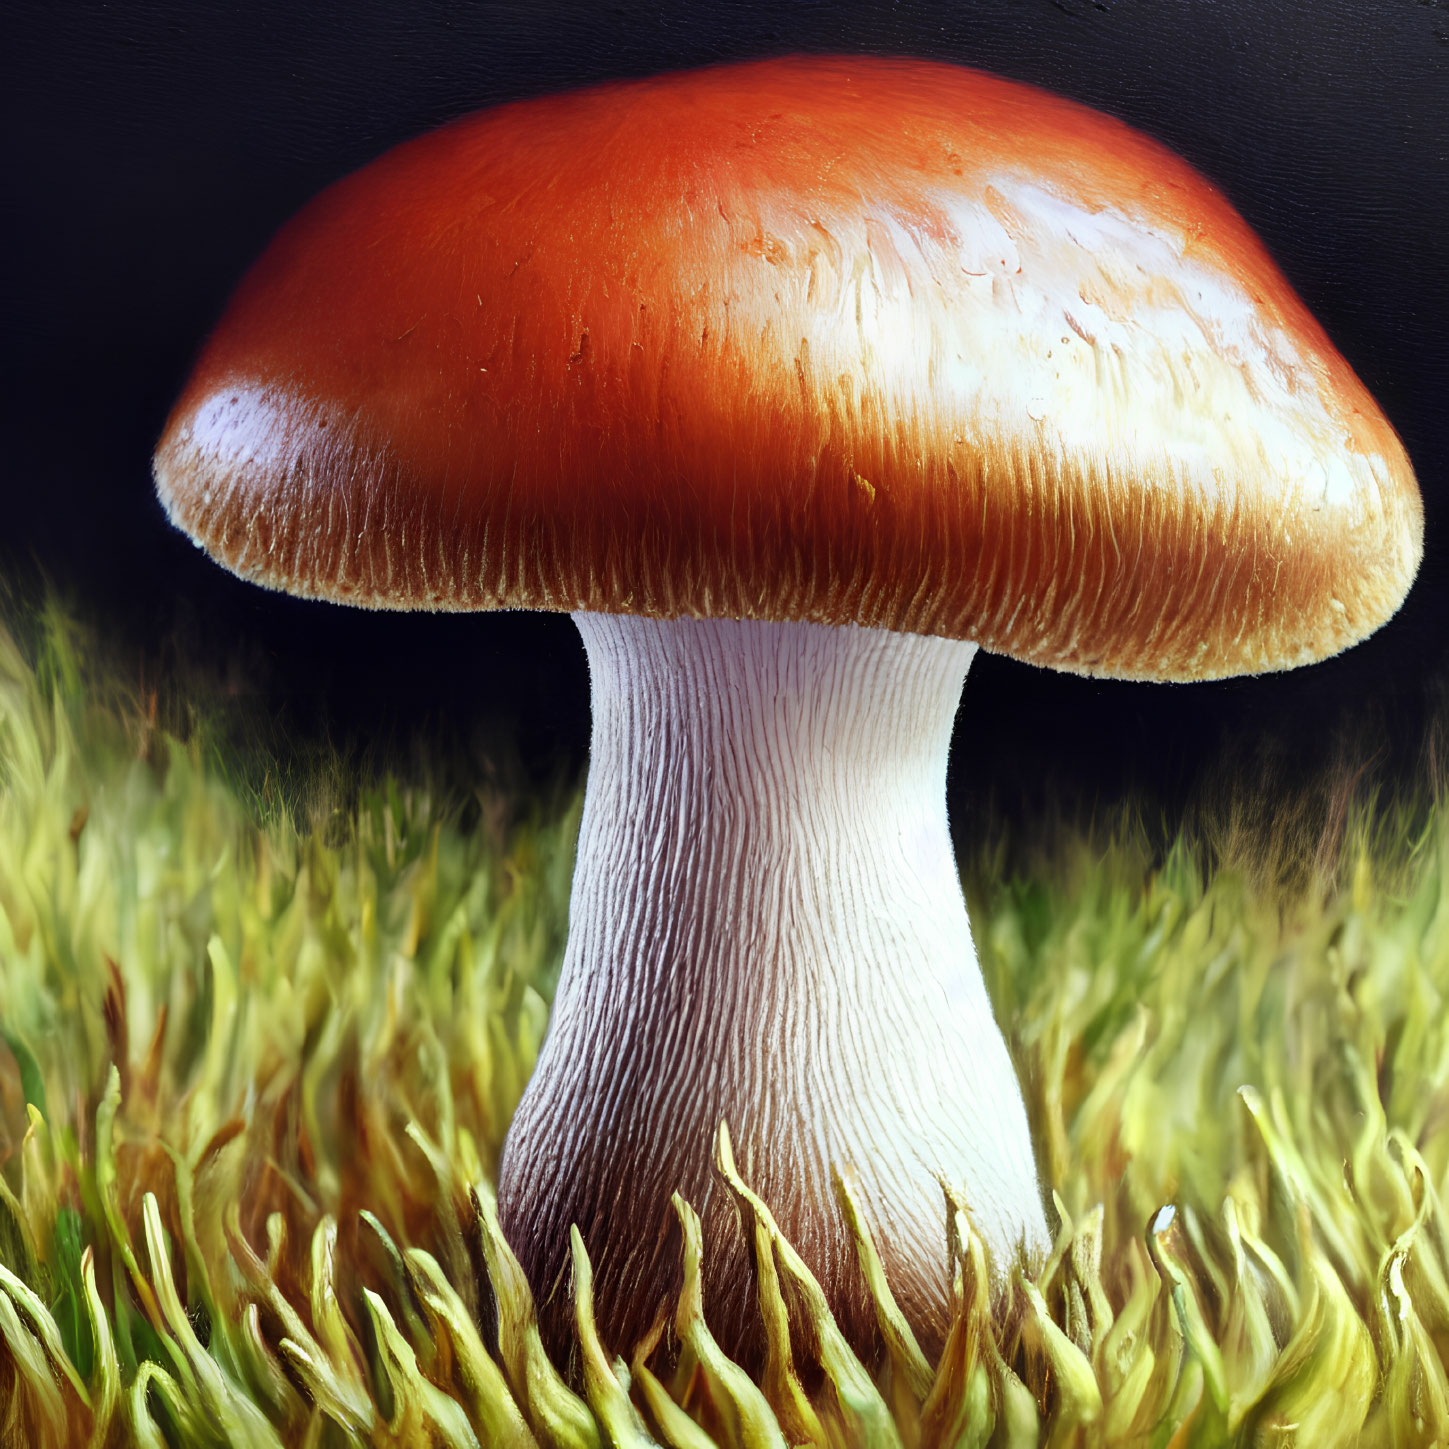 Vibrant orange mushroom with glossy cap on mossy background